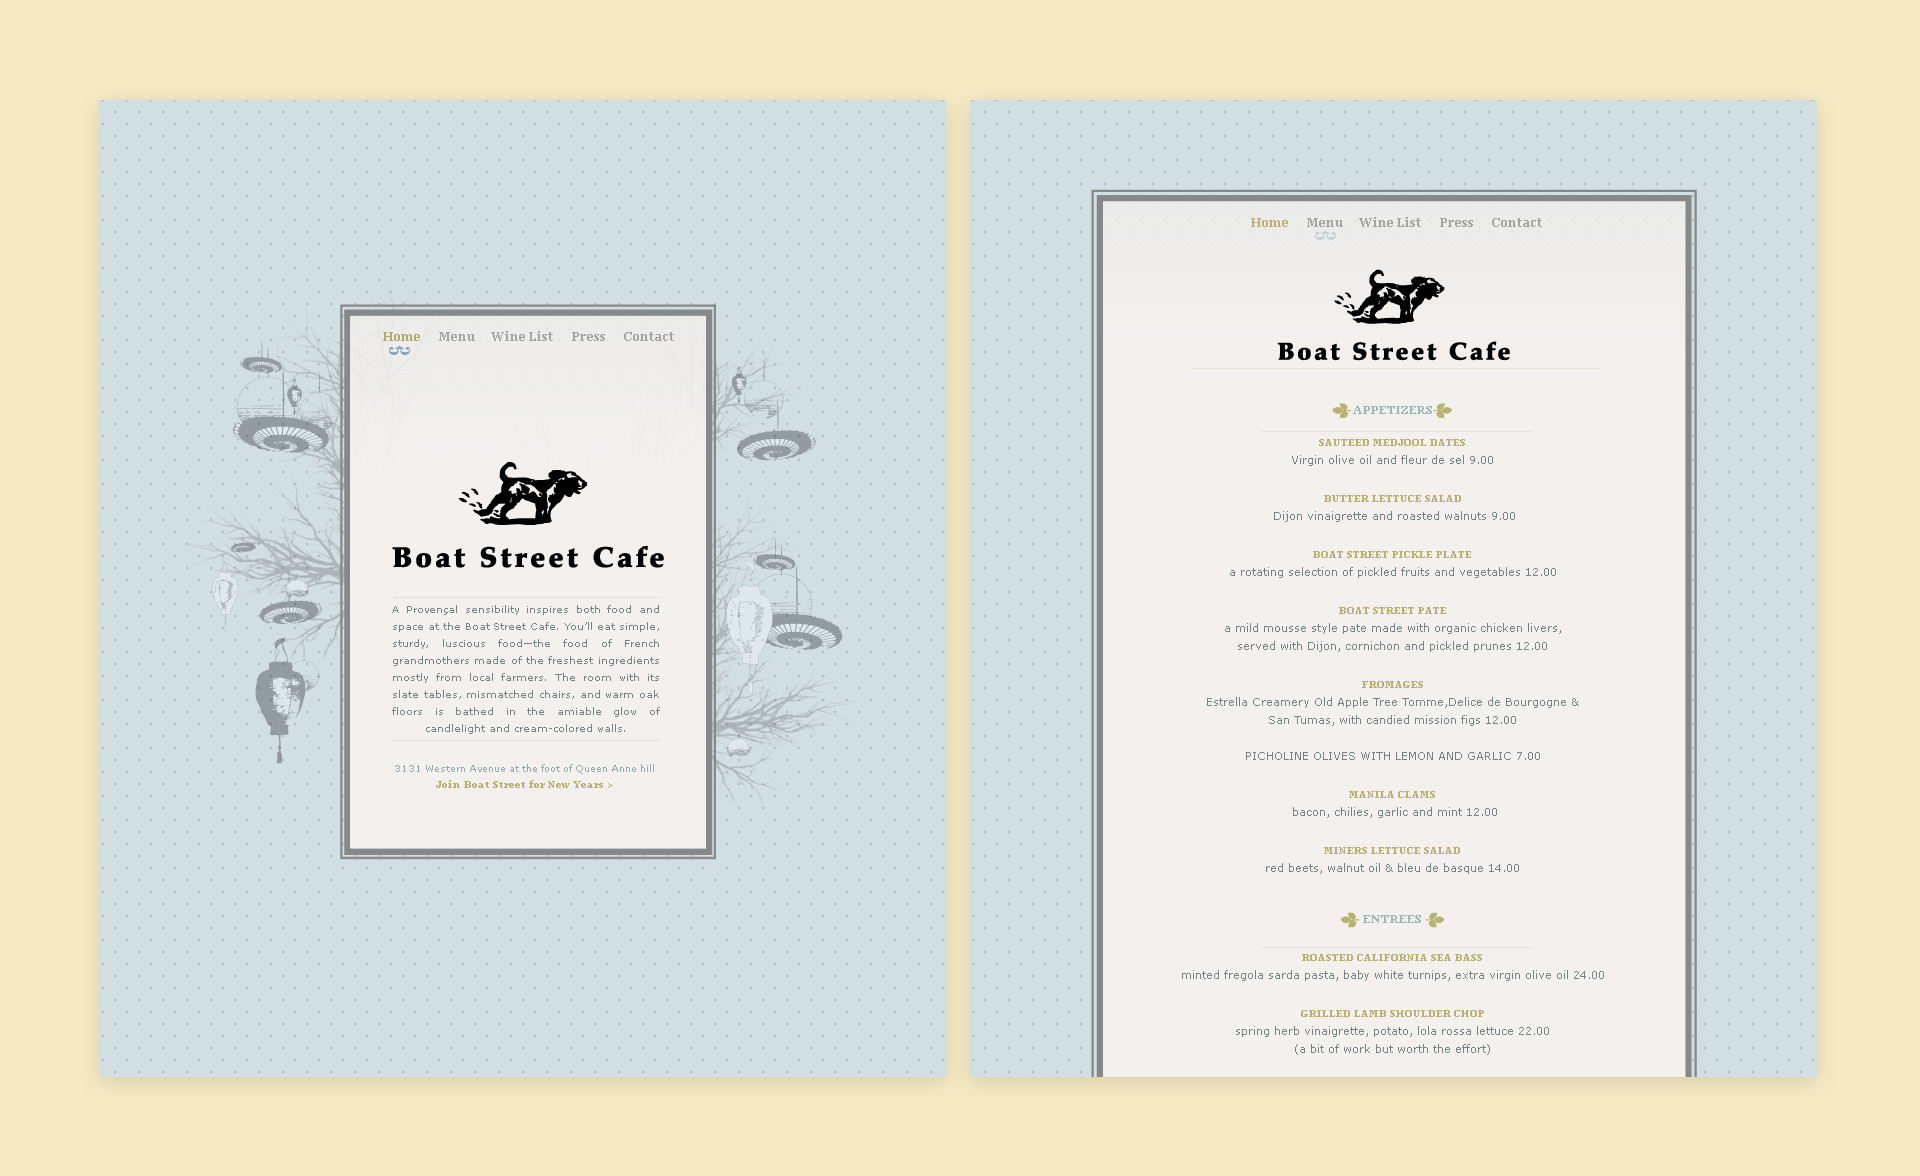 Boat Street Cafe Website Homepage and Menu